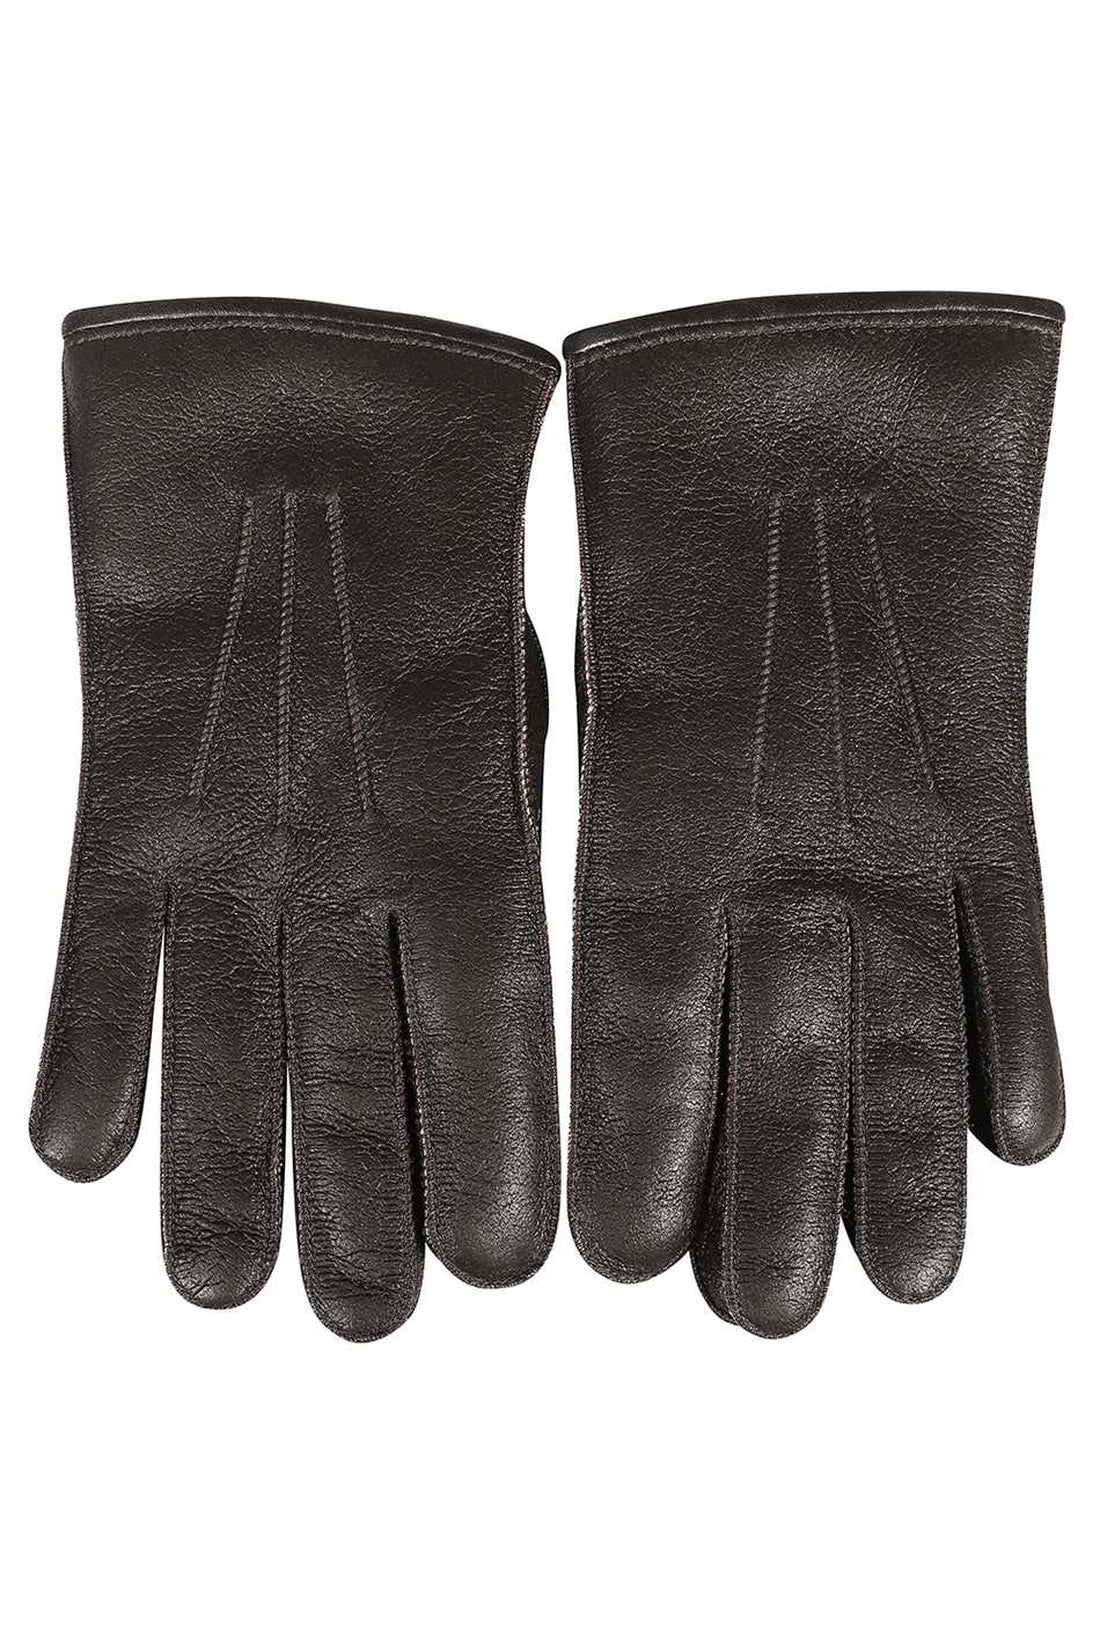 Parajumpers-OUTLET-SALE-Leather gloves-ARCHIVIST